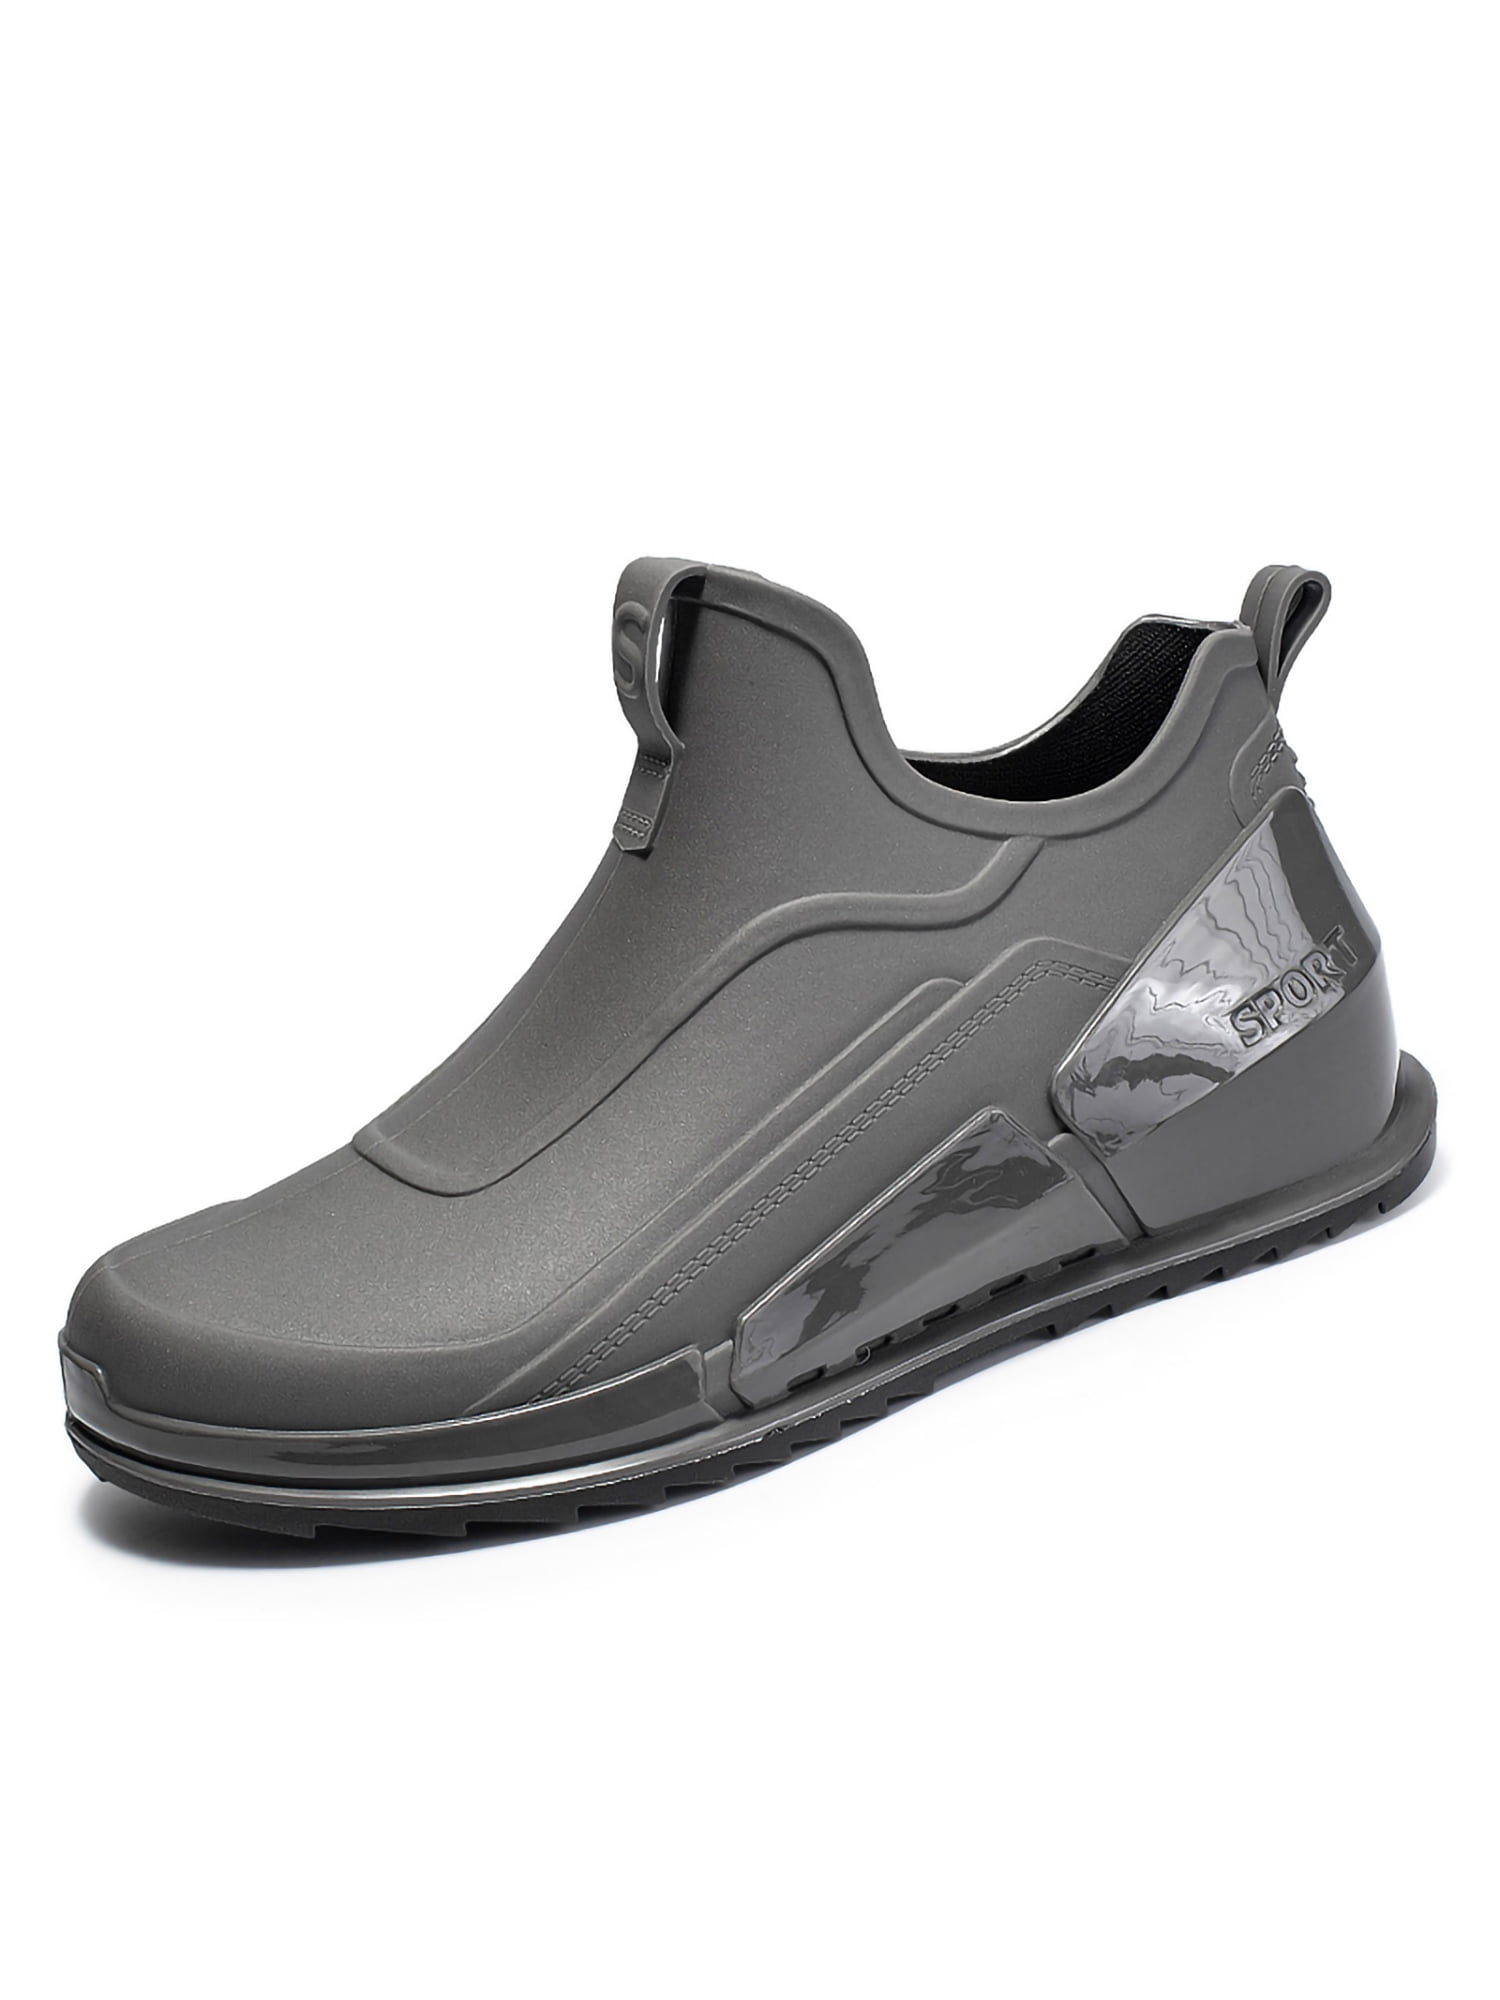 Ymiytan Men's Garden Shoes Outdoor Ankle Rain Boots Slip Resistant ...